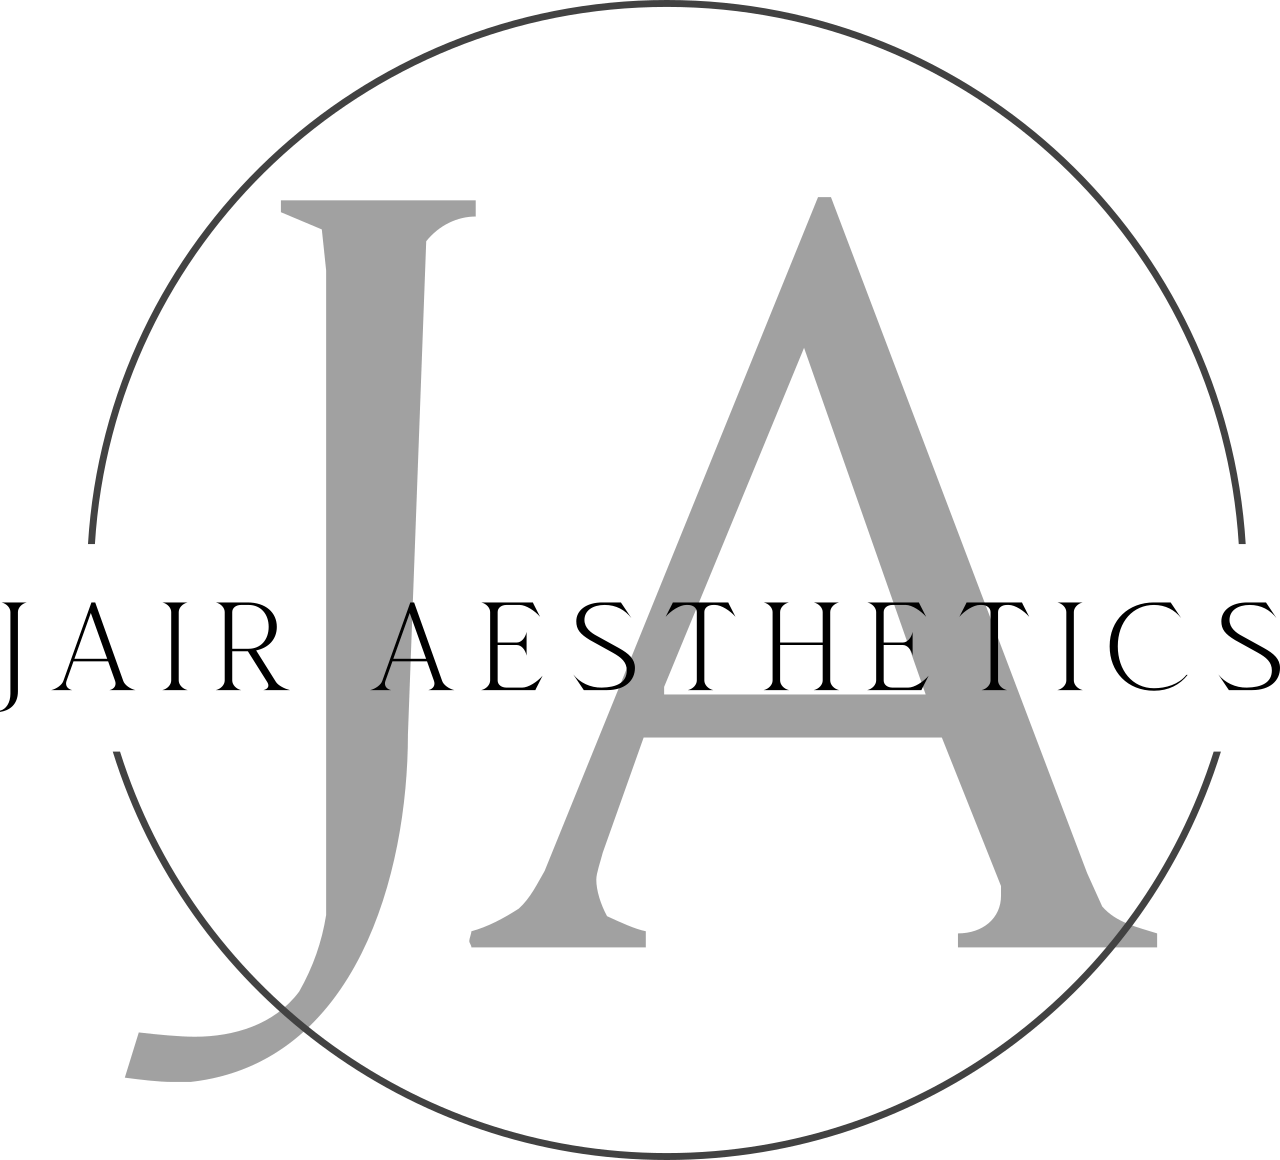 Jair Aesthetics 's logo